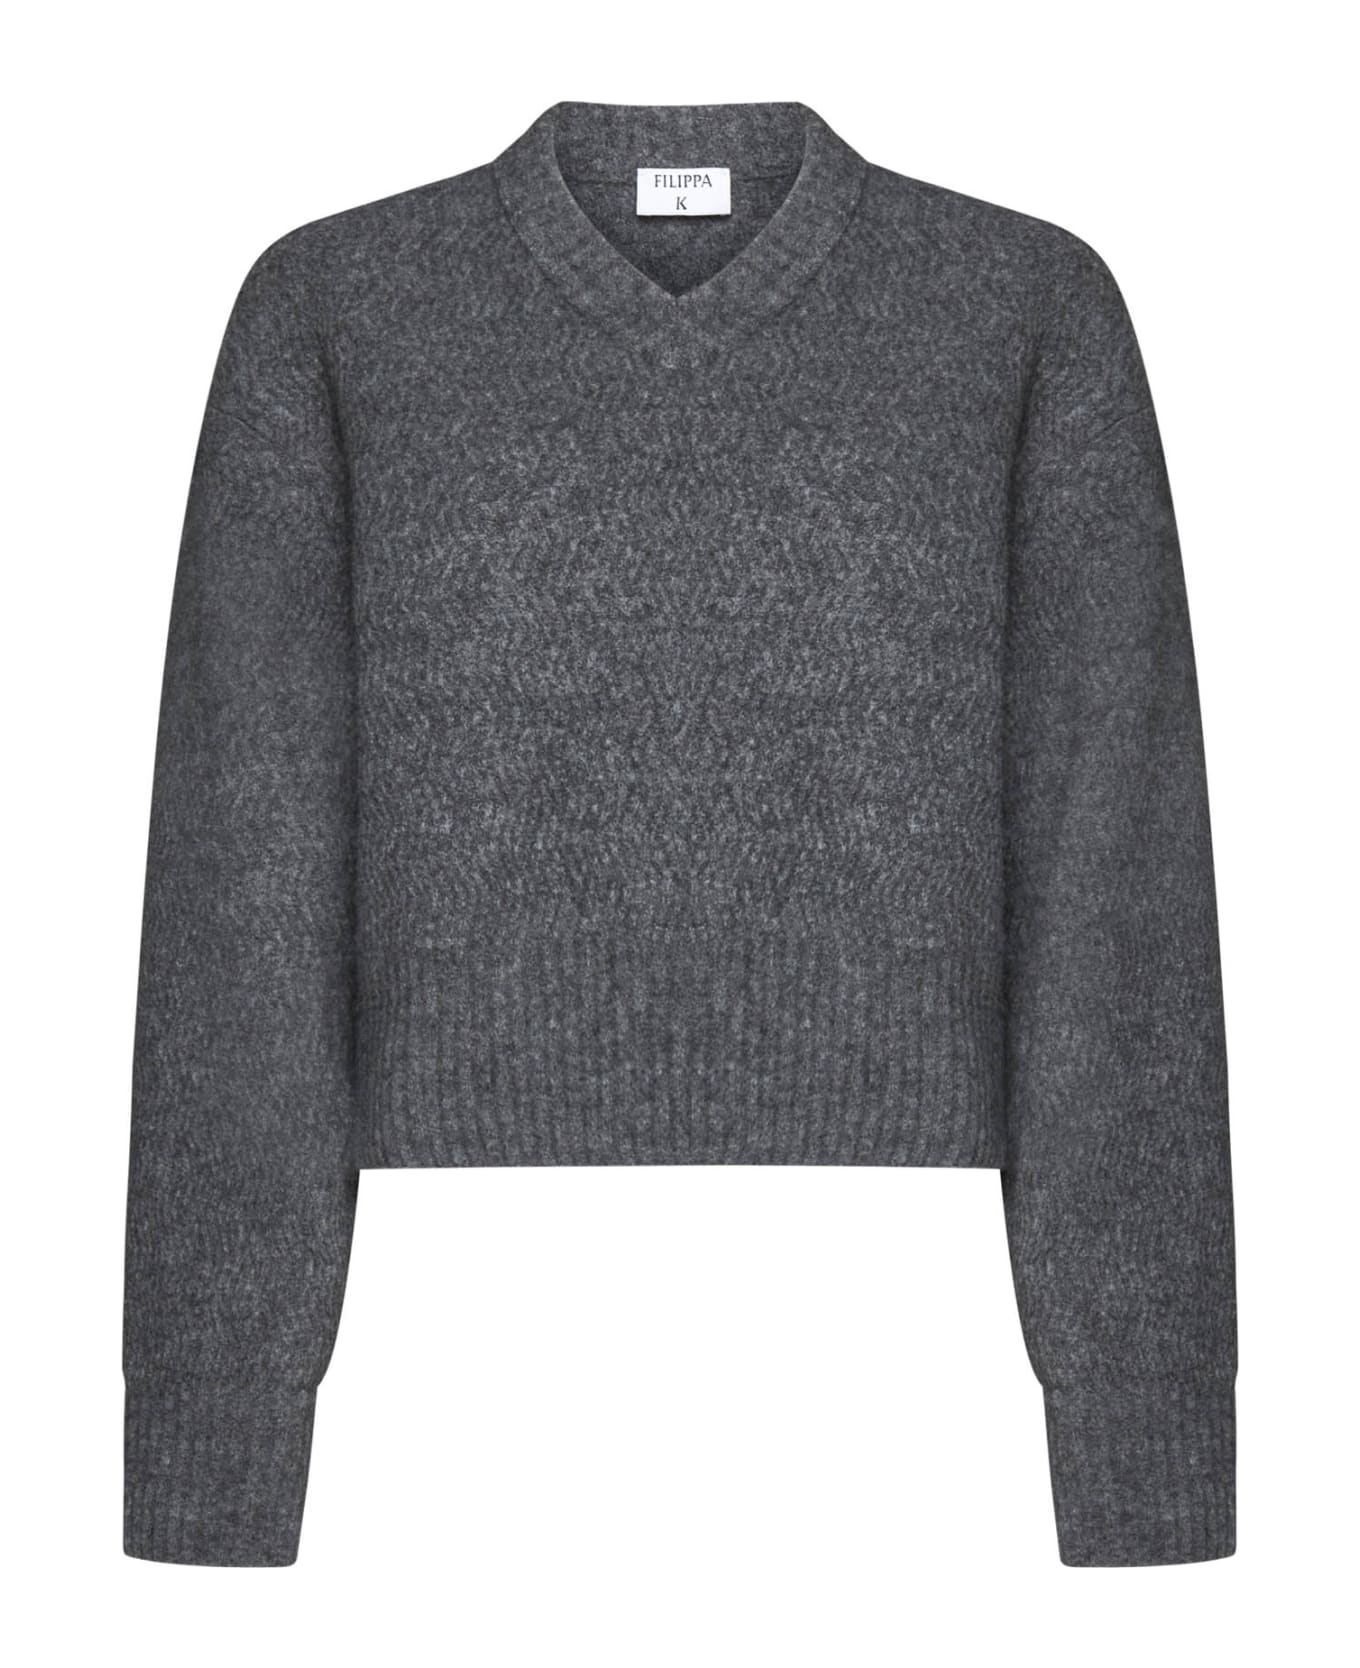 Filippa K Sweater - Grigio